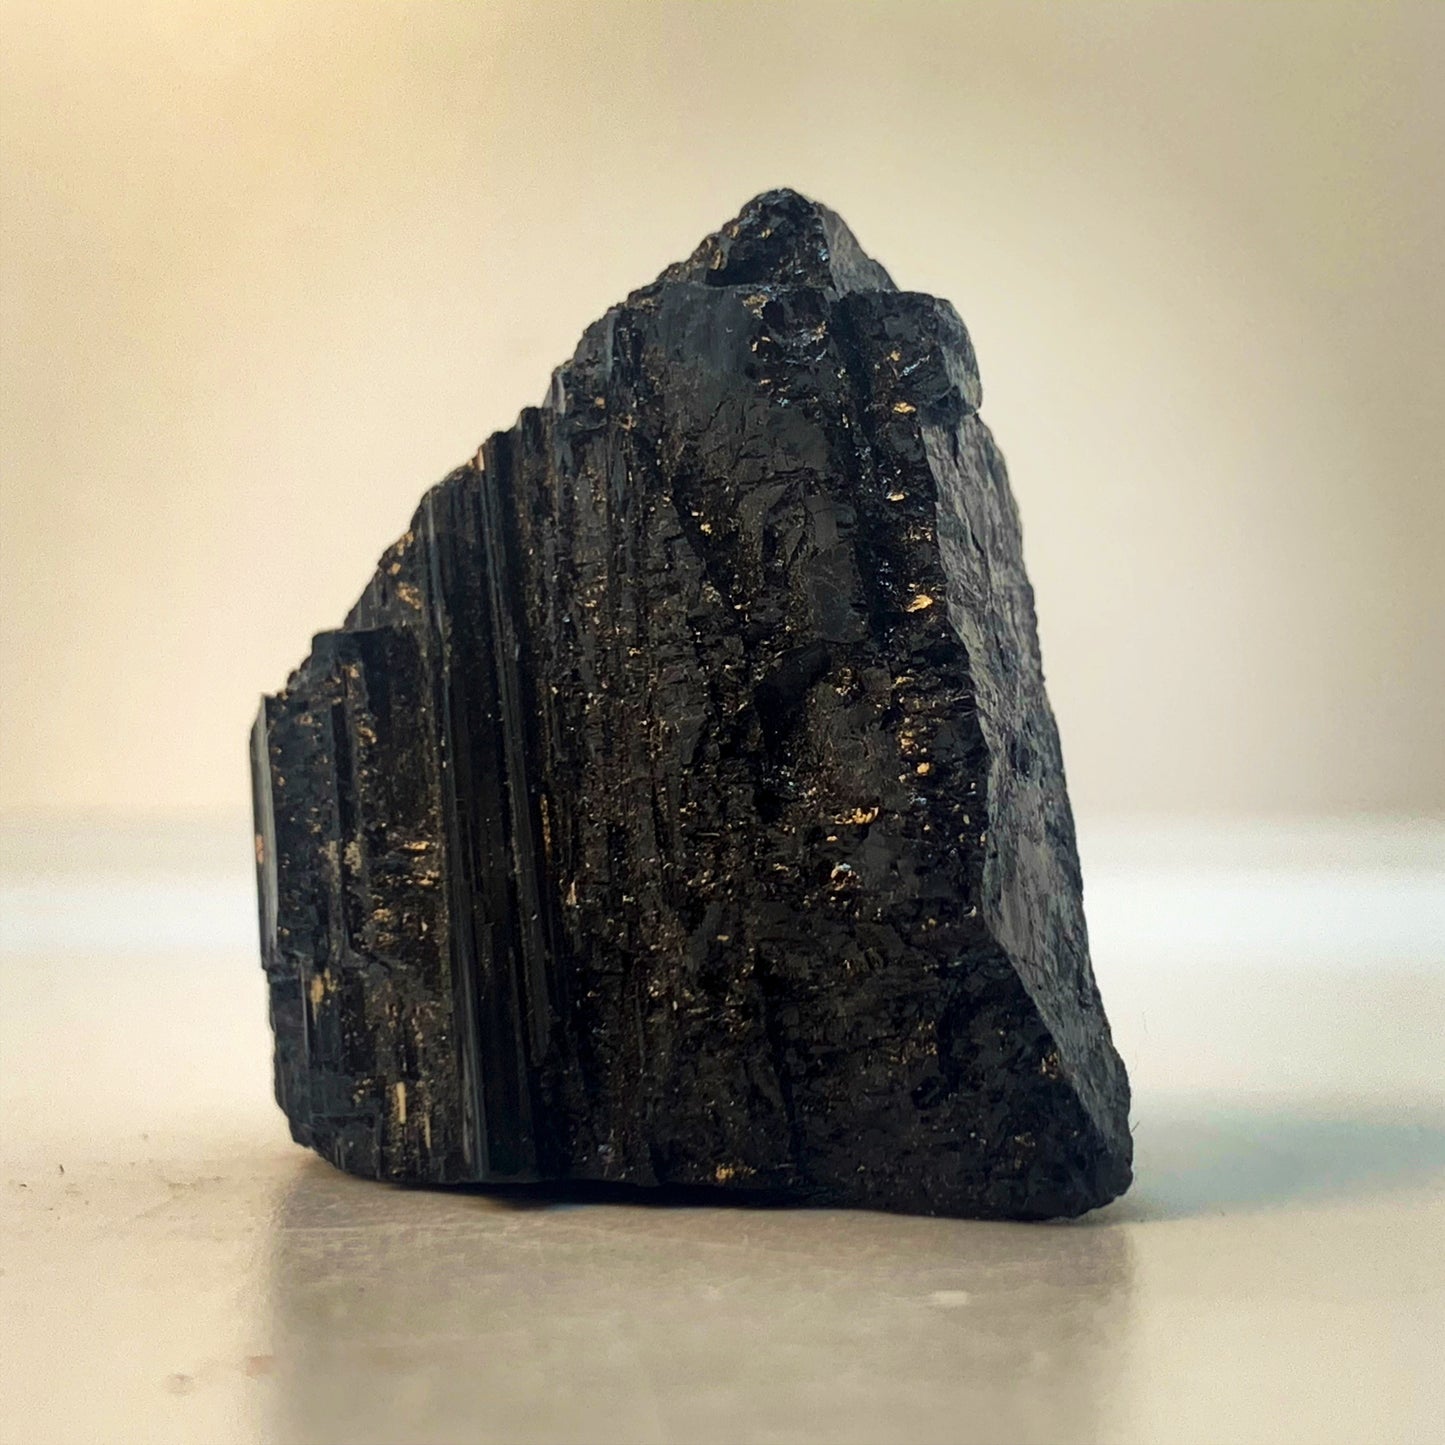 Black Tourmaline Crystal / Mineral / Gemstone / Rough / Raw Natural